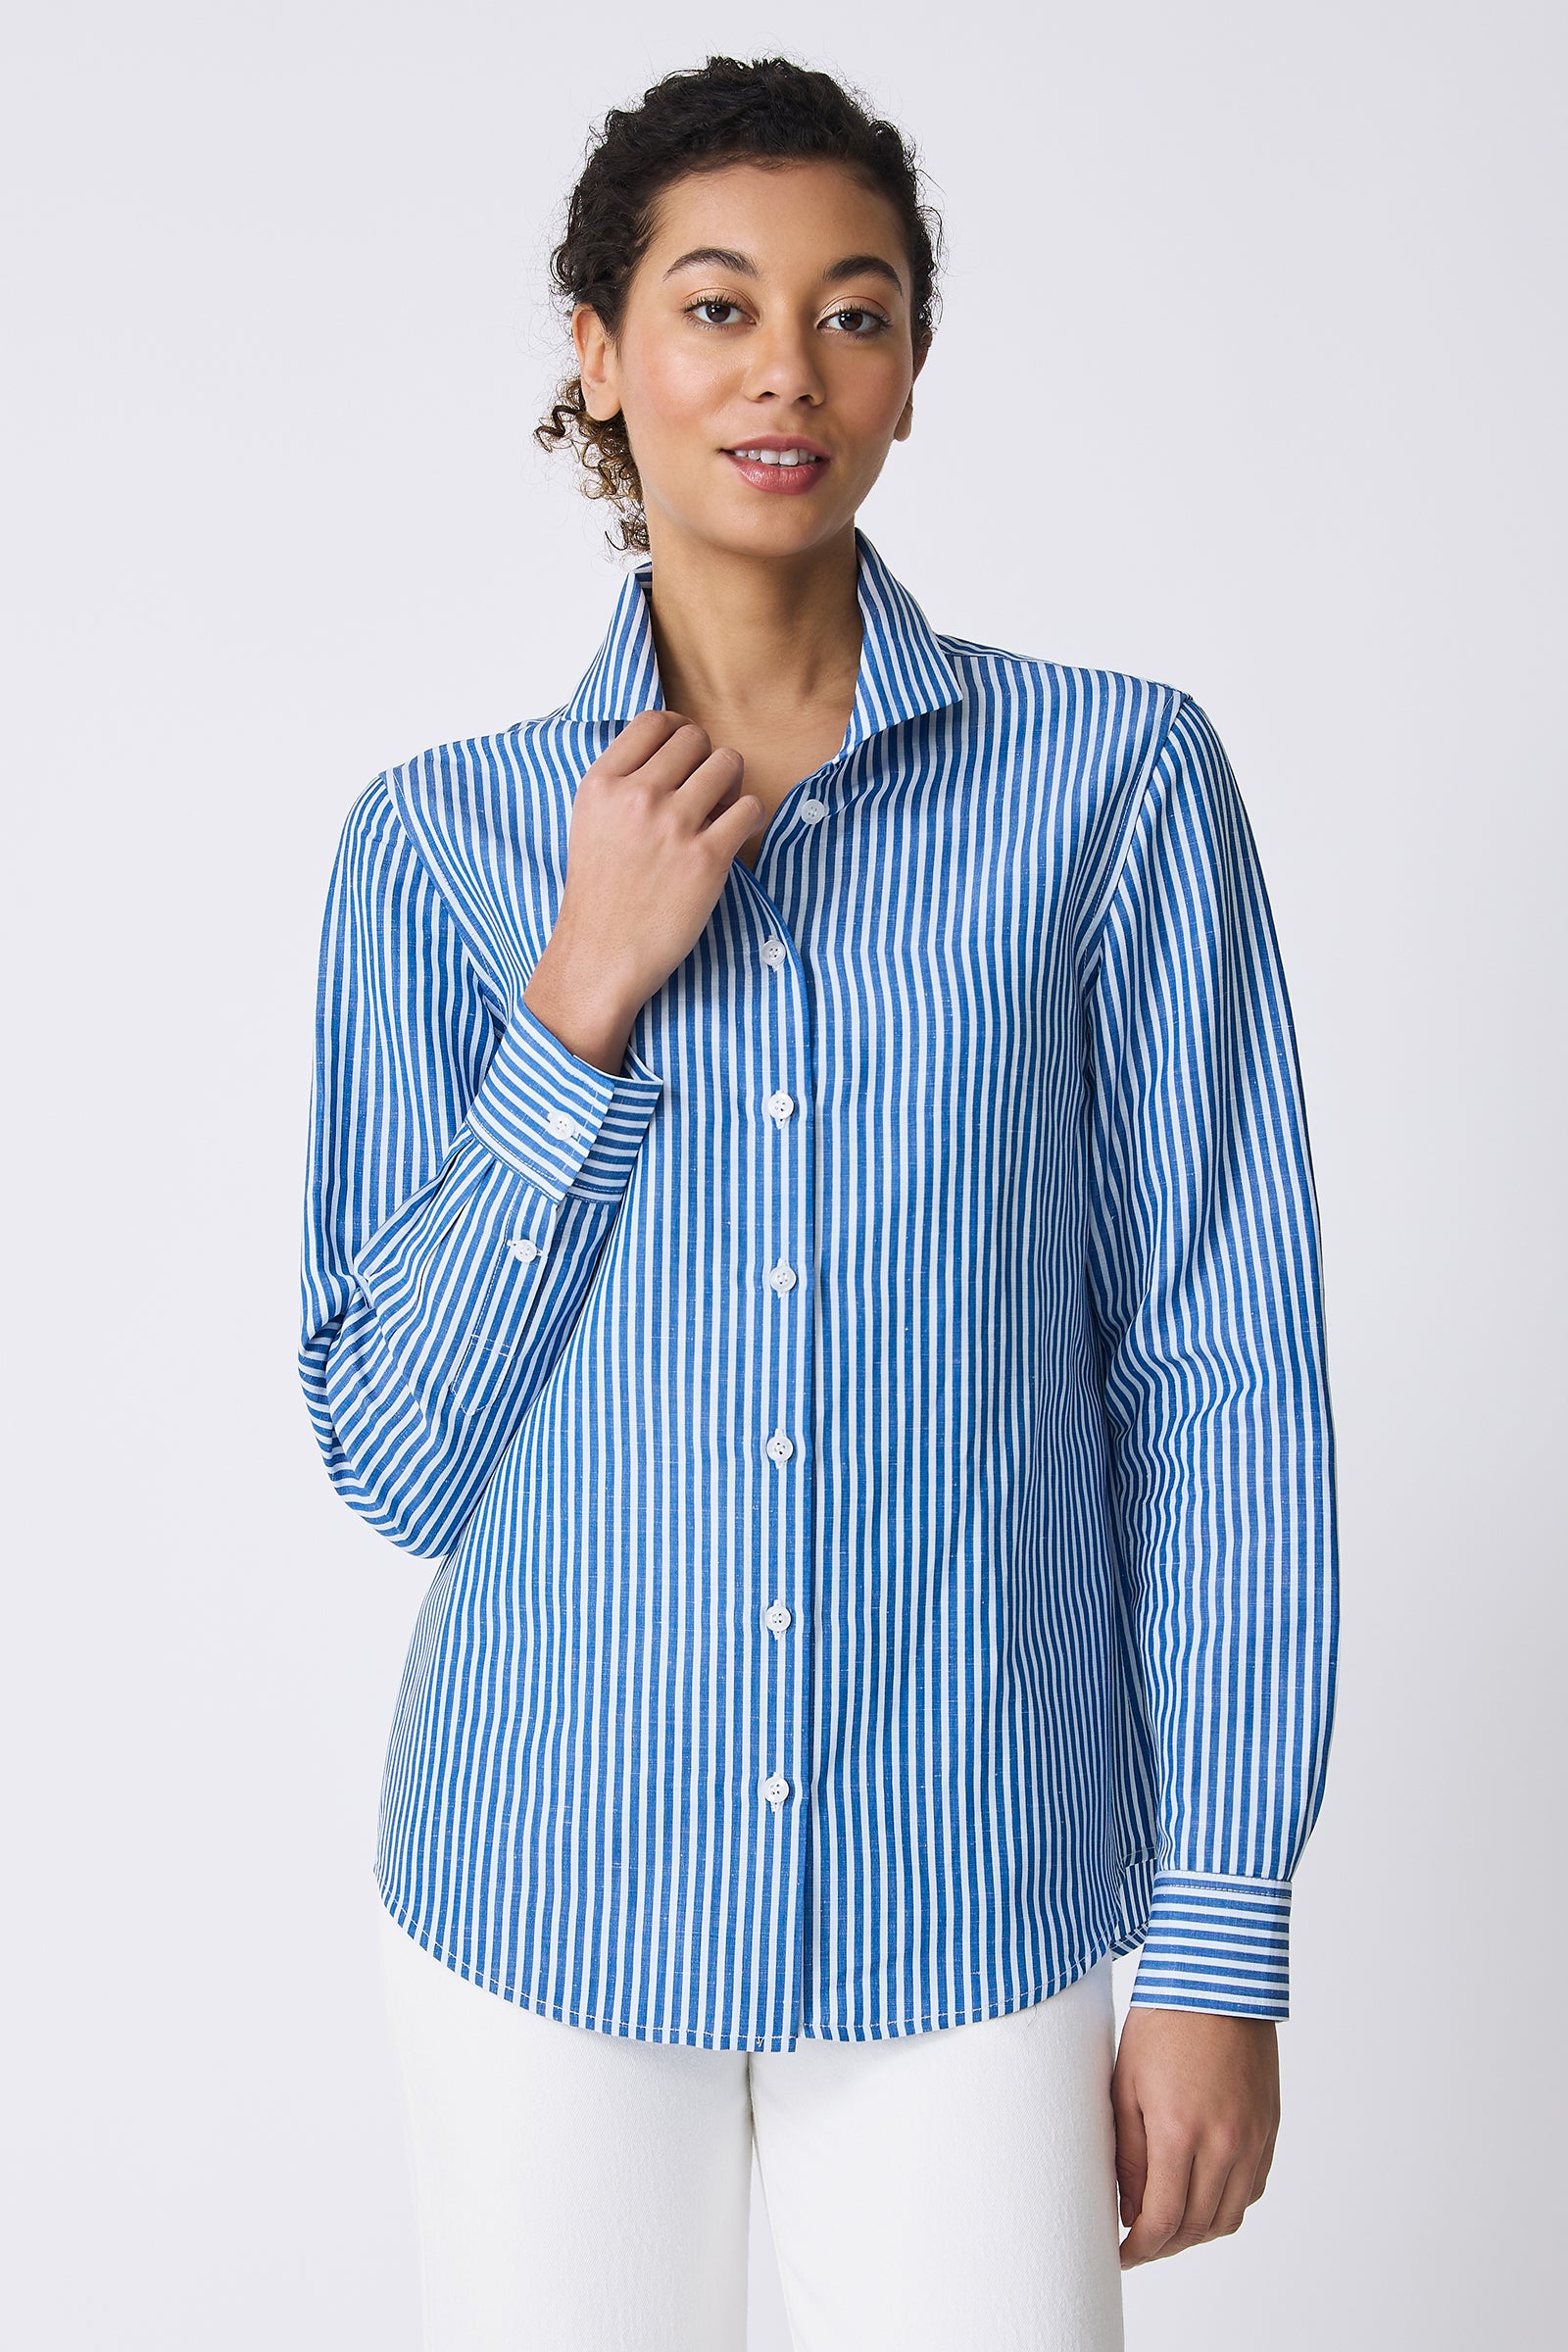 Kal Rieman Ginna Box Pleat Shirt in Cabana Stripe Blue on model touching shirt front view